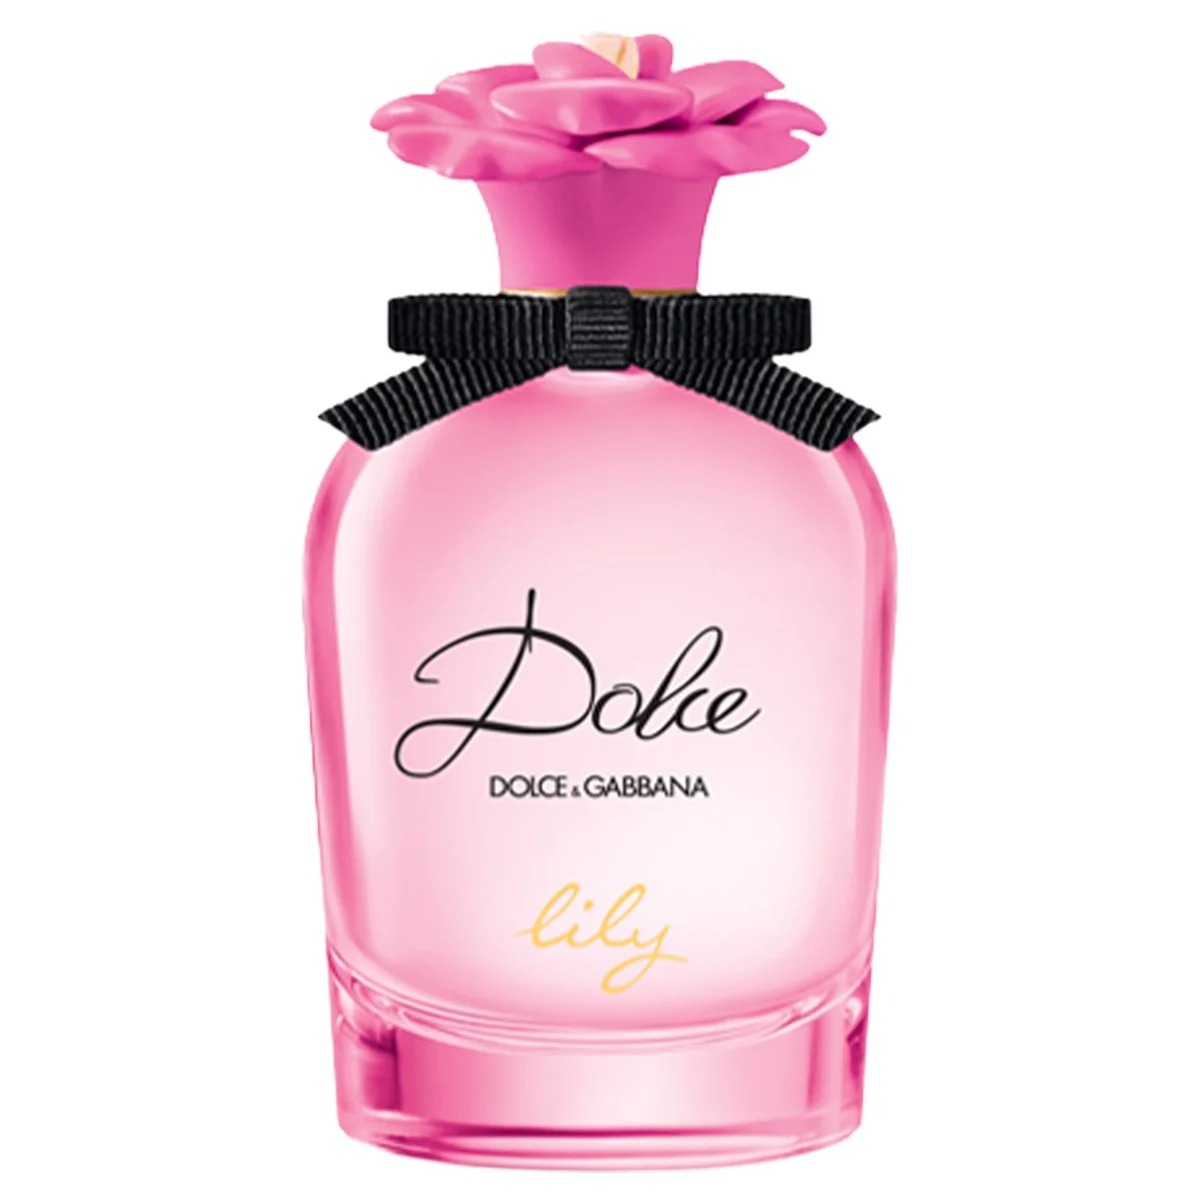 Nước hoa Dolce & Gabbana Dolce Lily